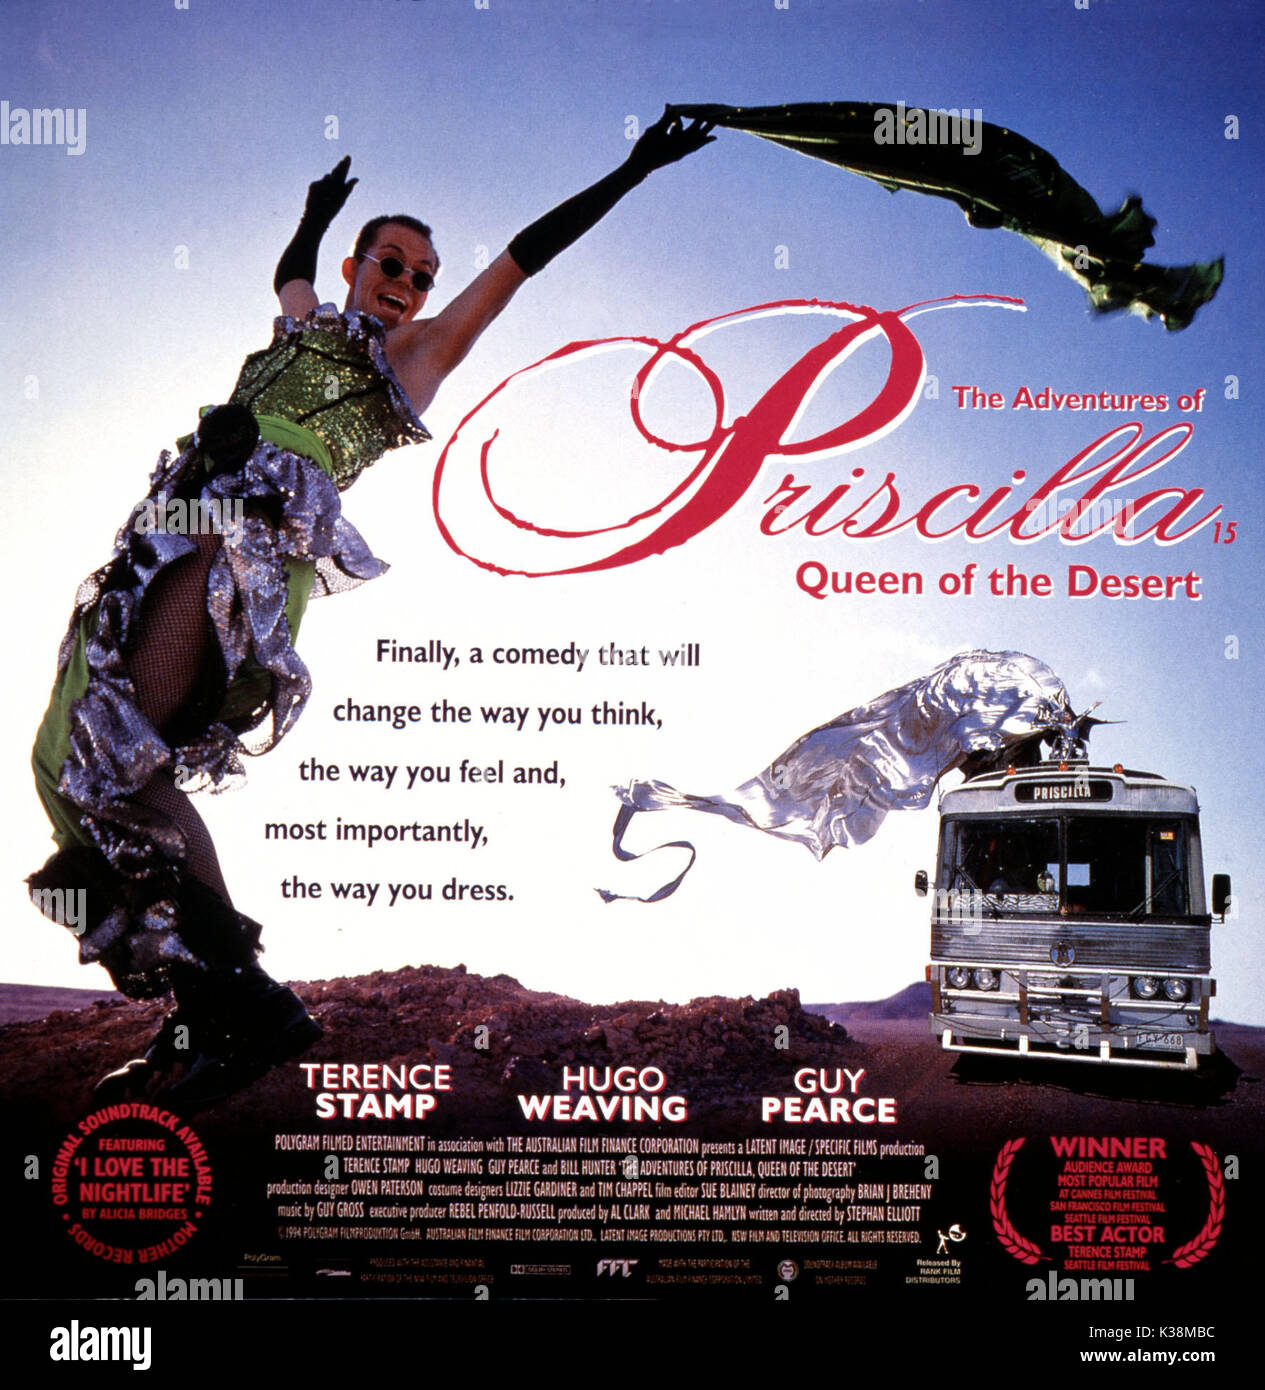 POSTCARD / Priscilla, queen of the desert / Terence Stamp / Hugo